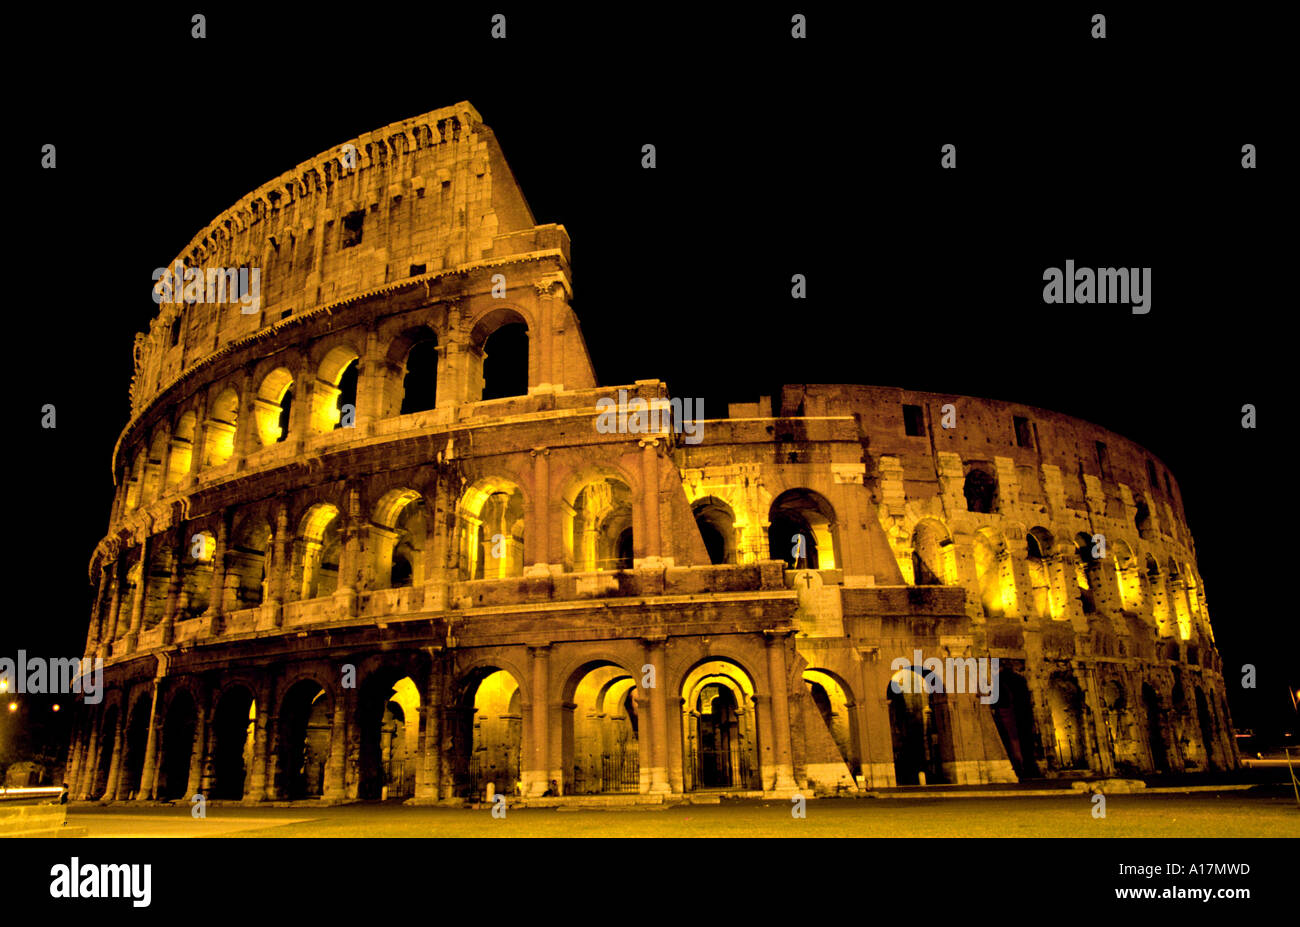 Colosseum - Colosseo oval amphitheatre in the centre of the city of Rome,  AD 70–80, Builder emperor Vespasian Titus, Roman, Rome, Italy. Stock Photo